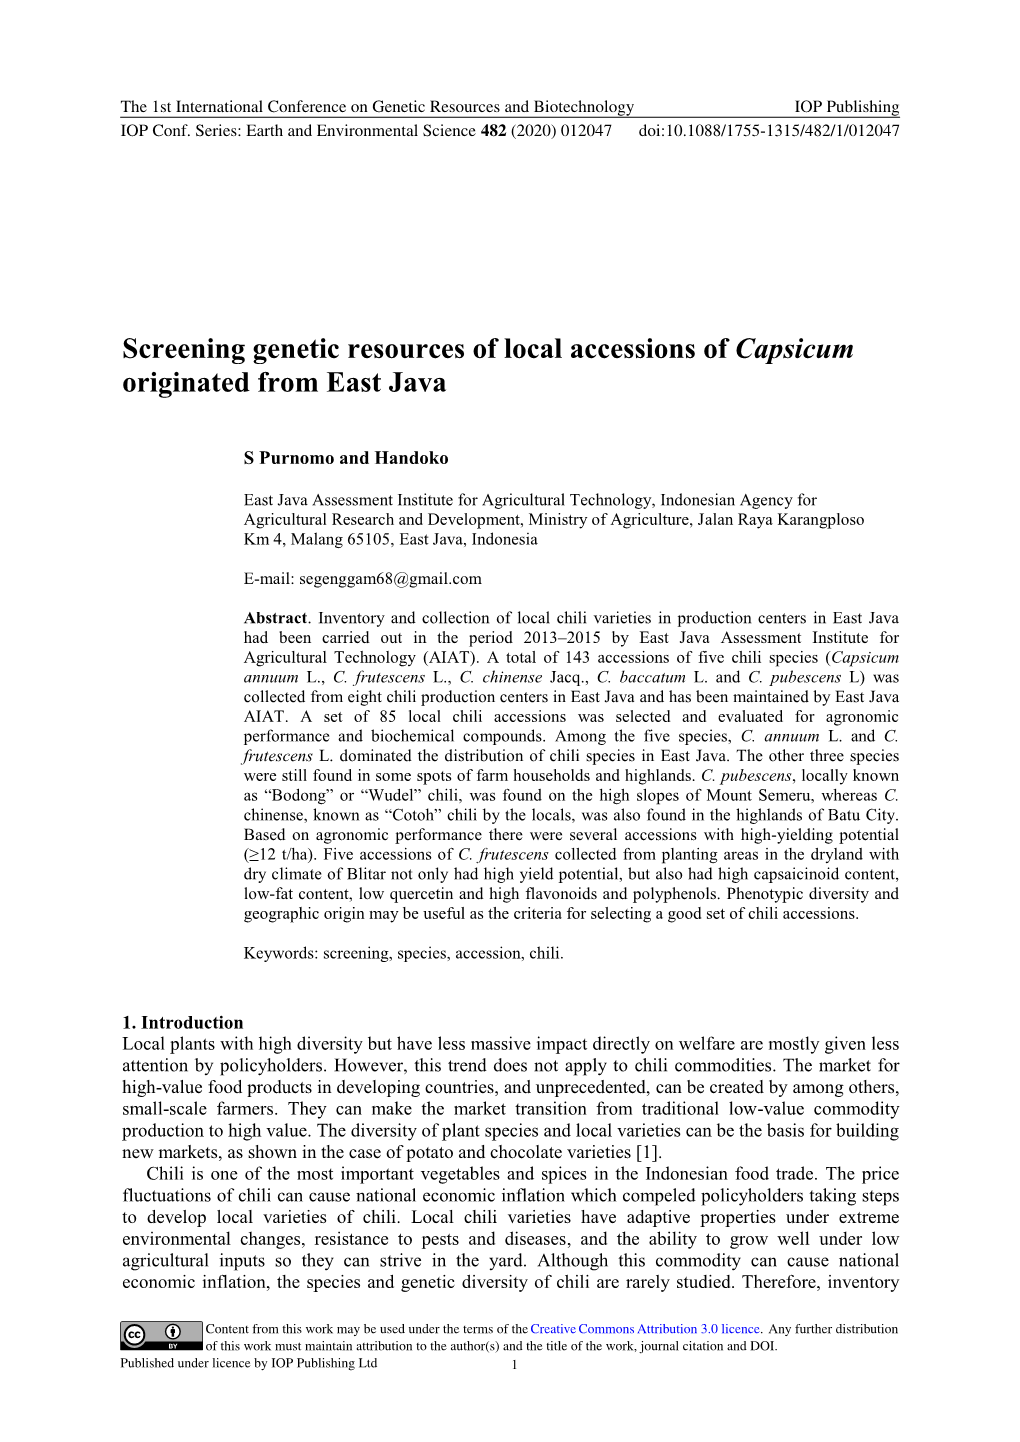 Screening Genetic Resources of Local Accessions of Capsicum Originated from East Java